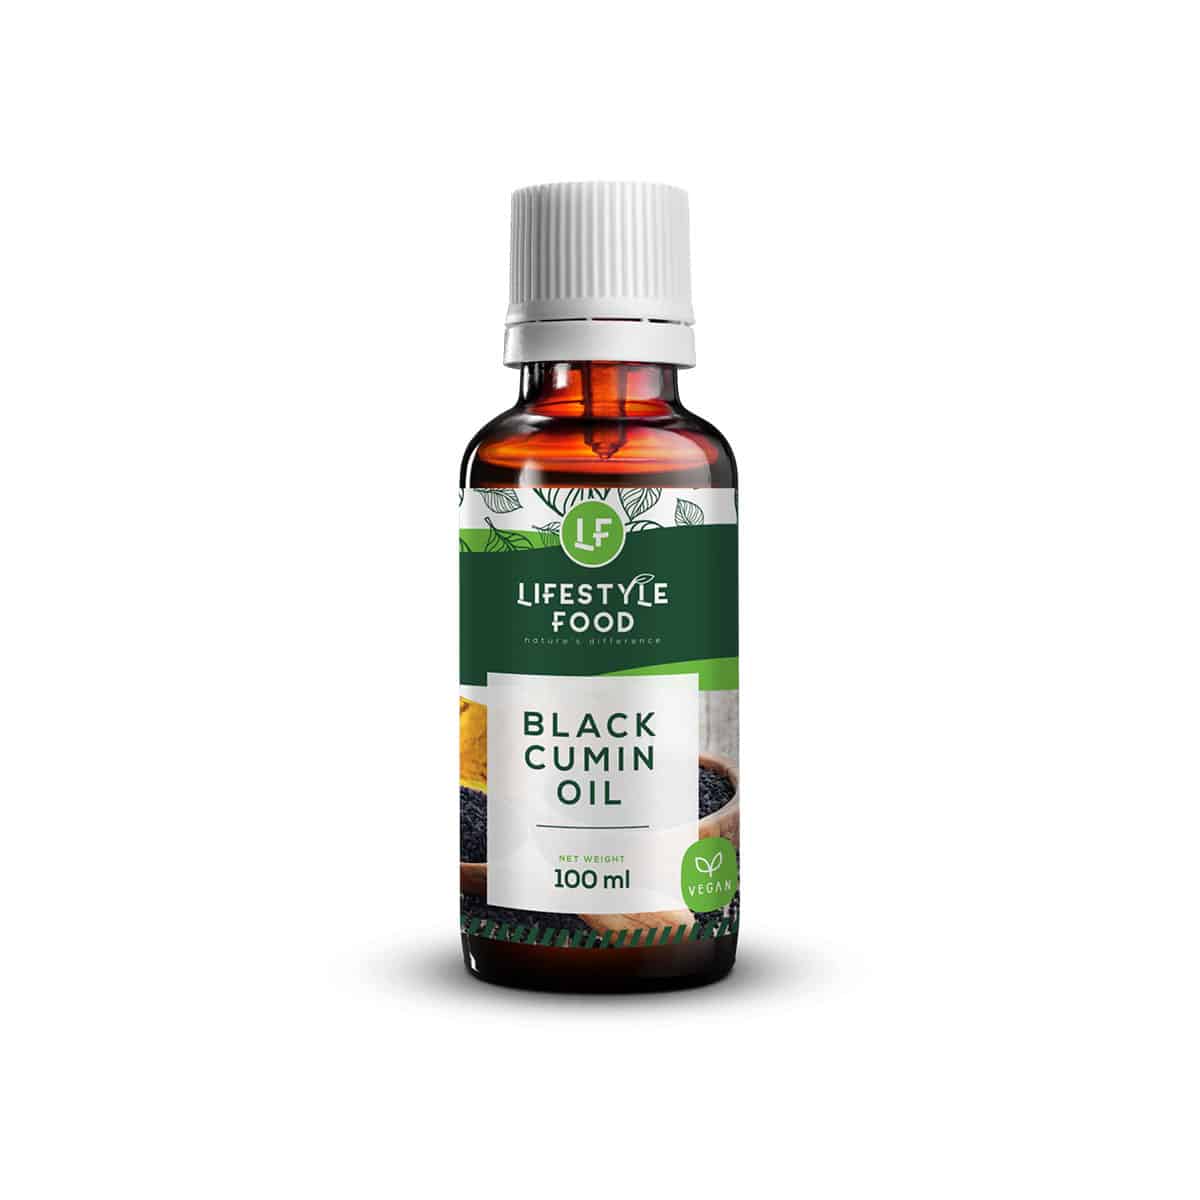 Lifestyle Food Black Cumin Oil - 100ml